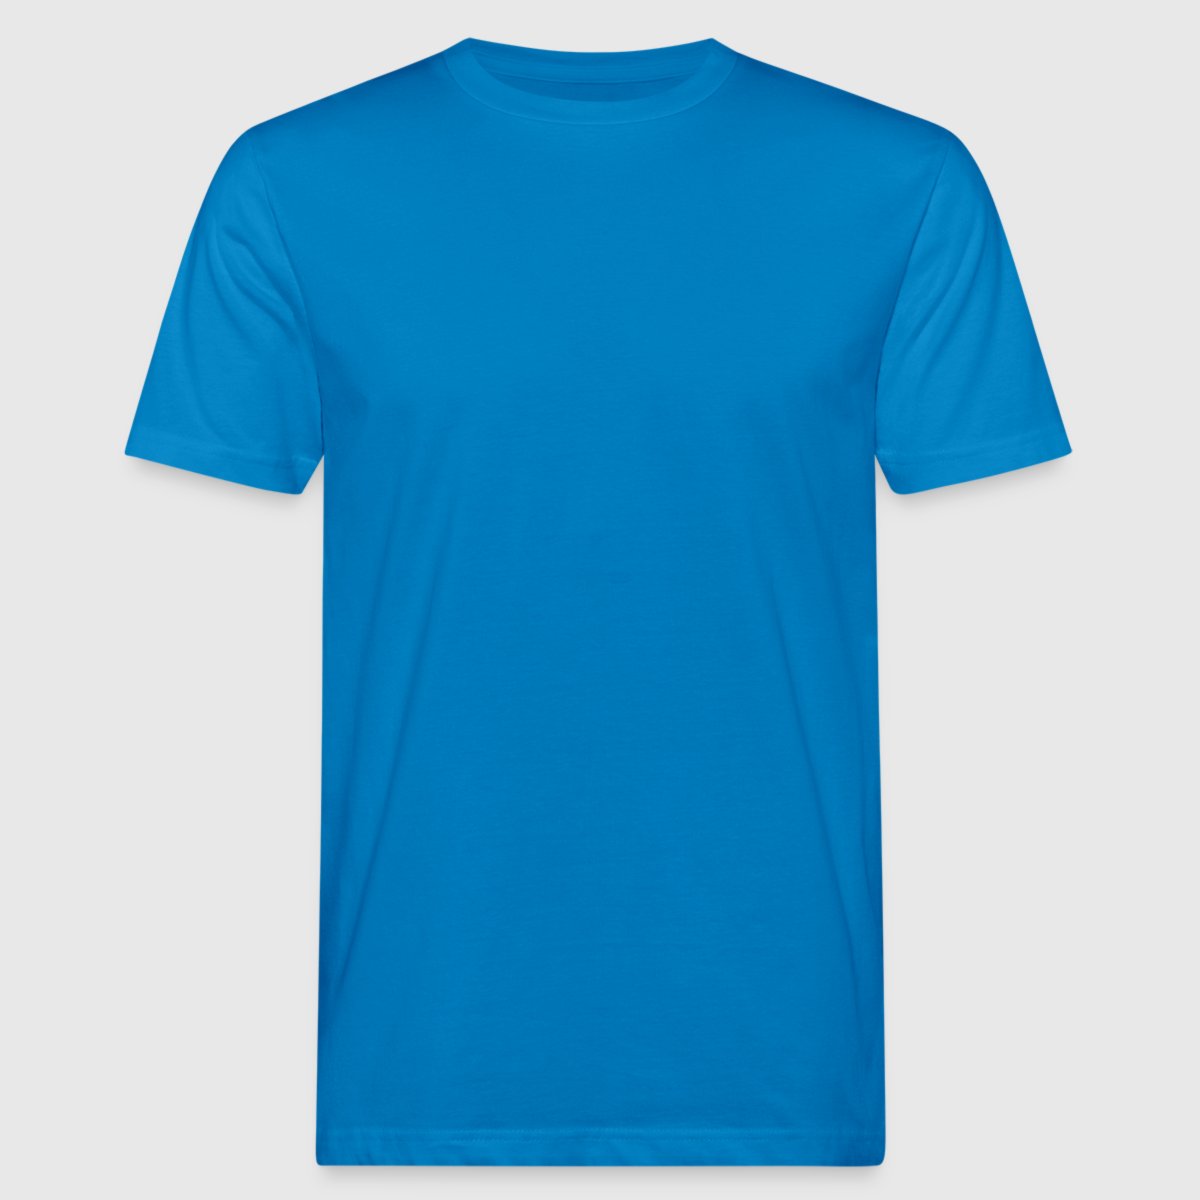 Men's Organic T-Shirt - Front